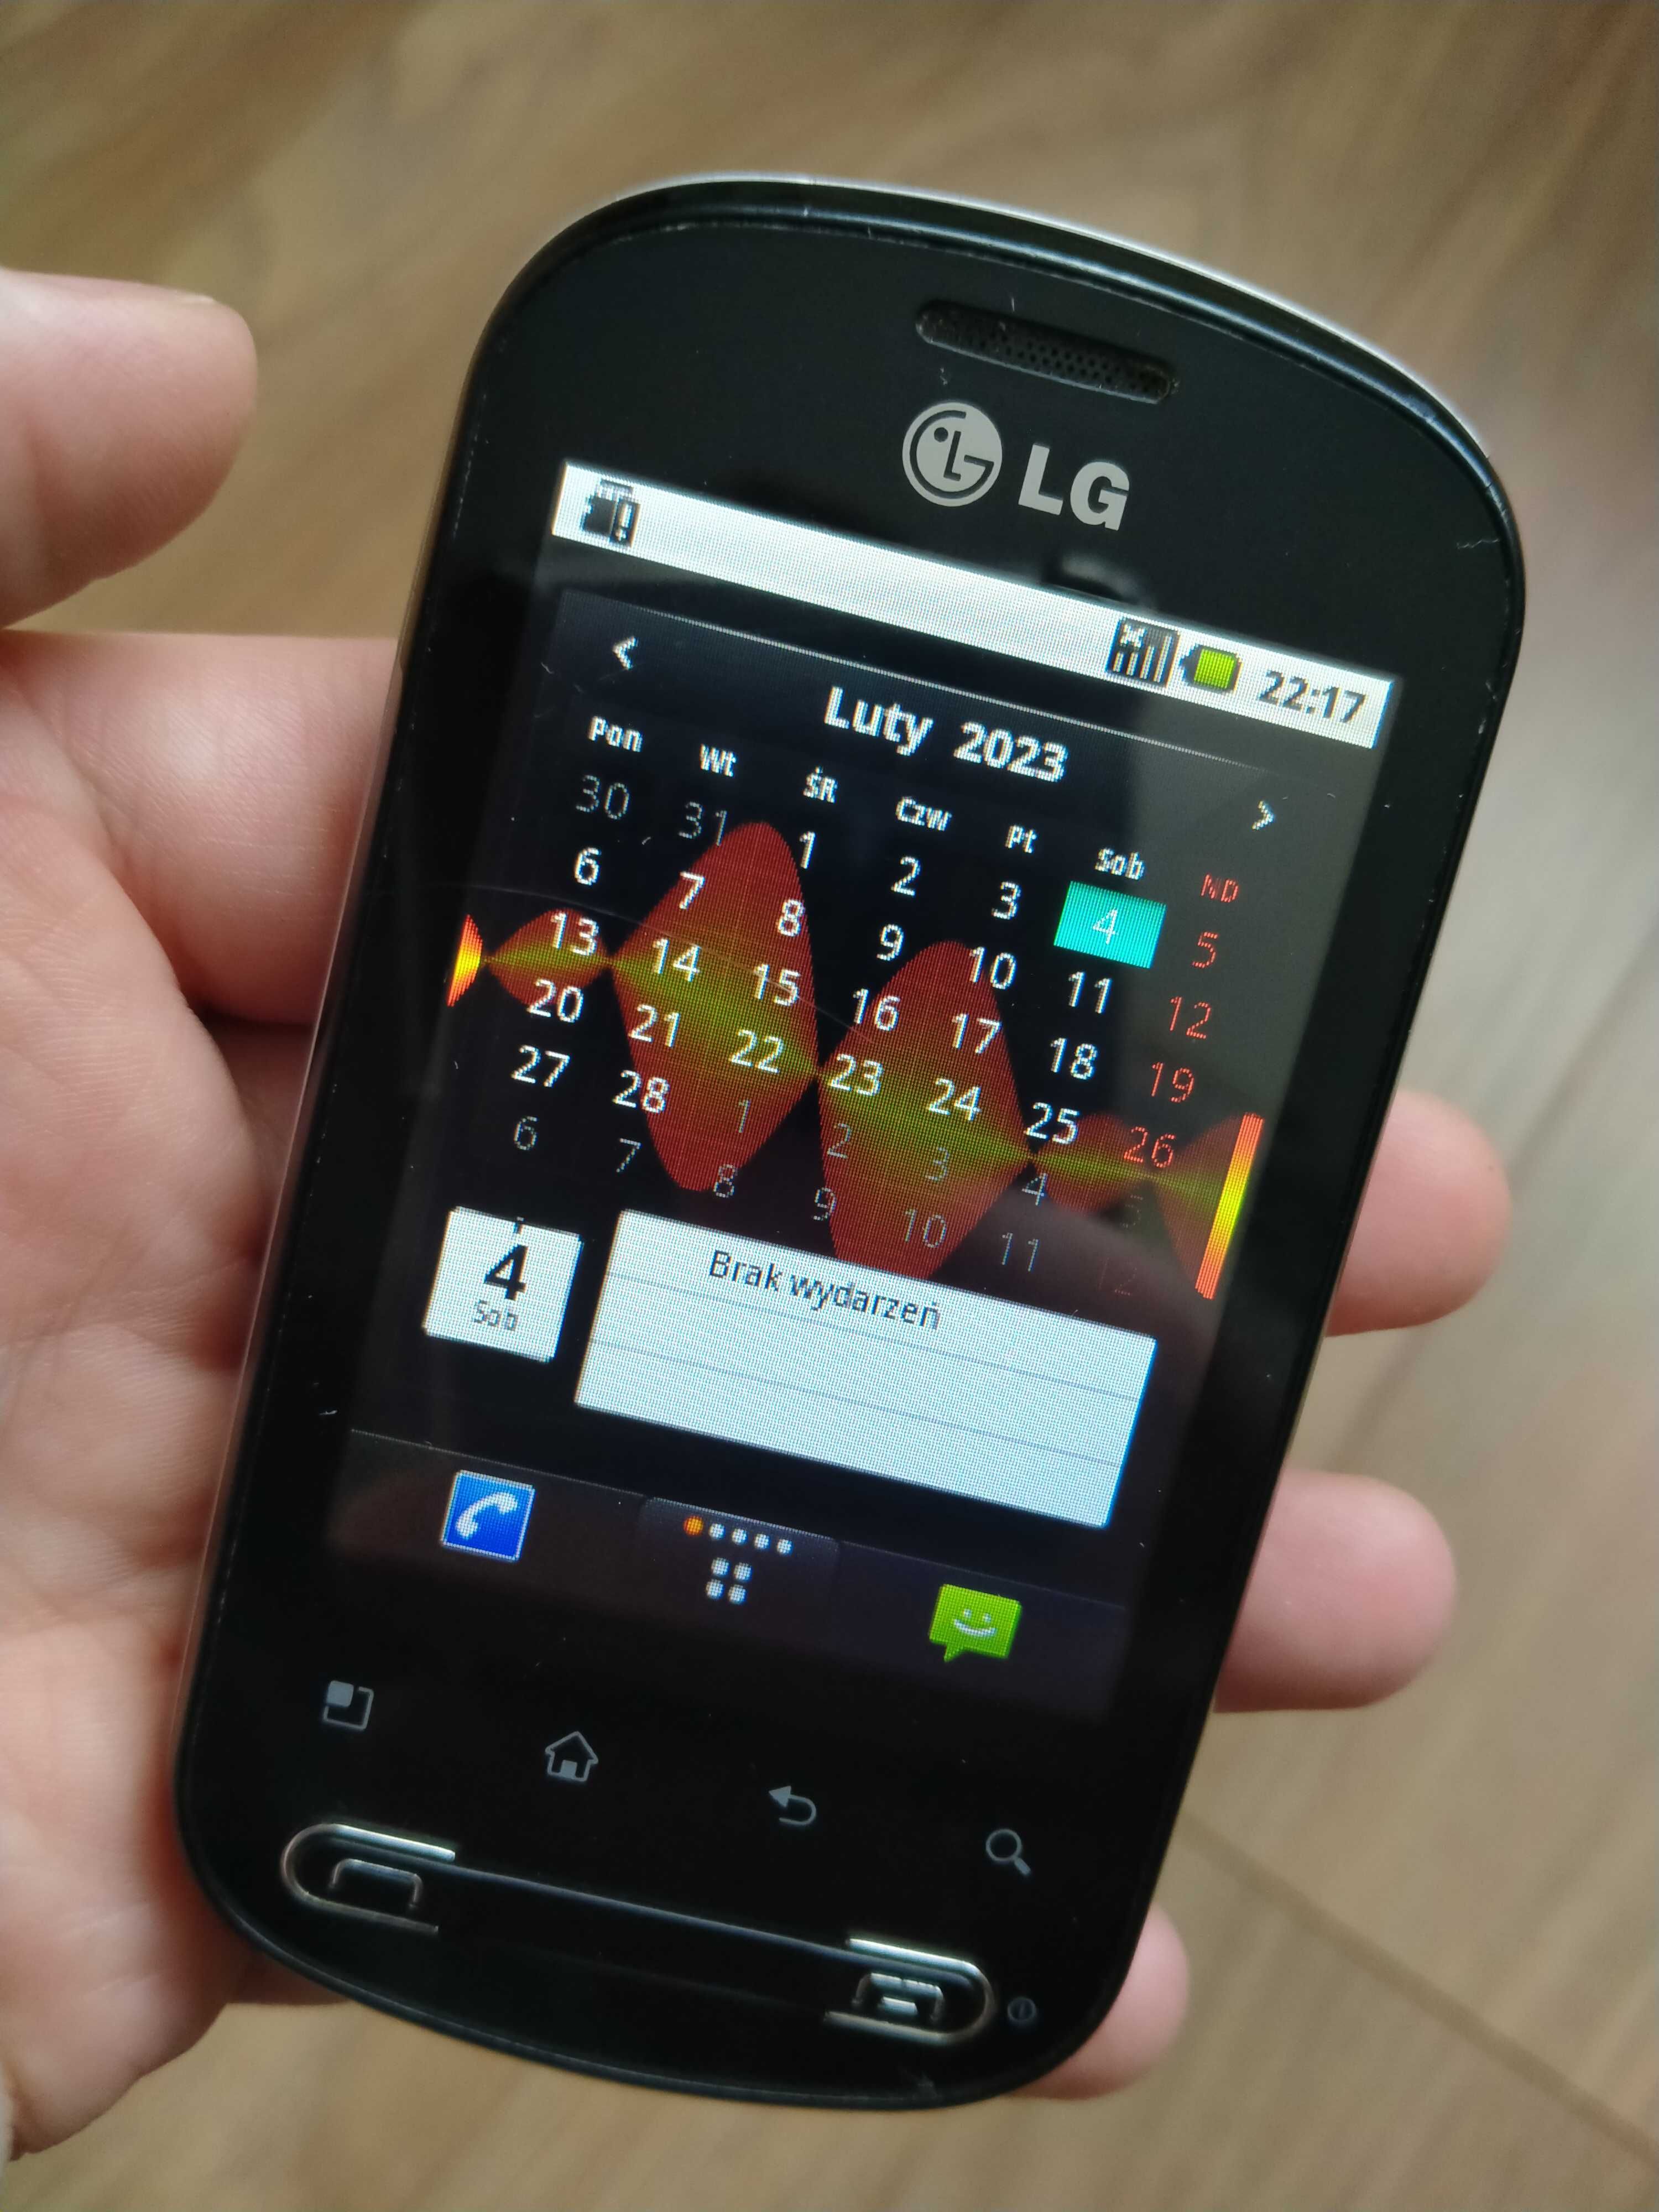 Smartfon LG Optimus P350 smartfon, stan bdb, działa jak nowy